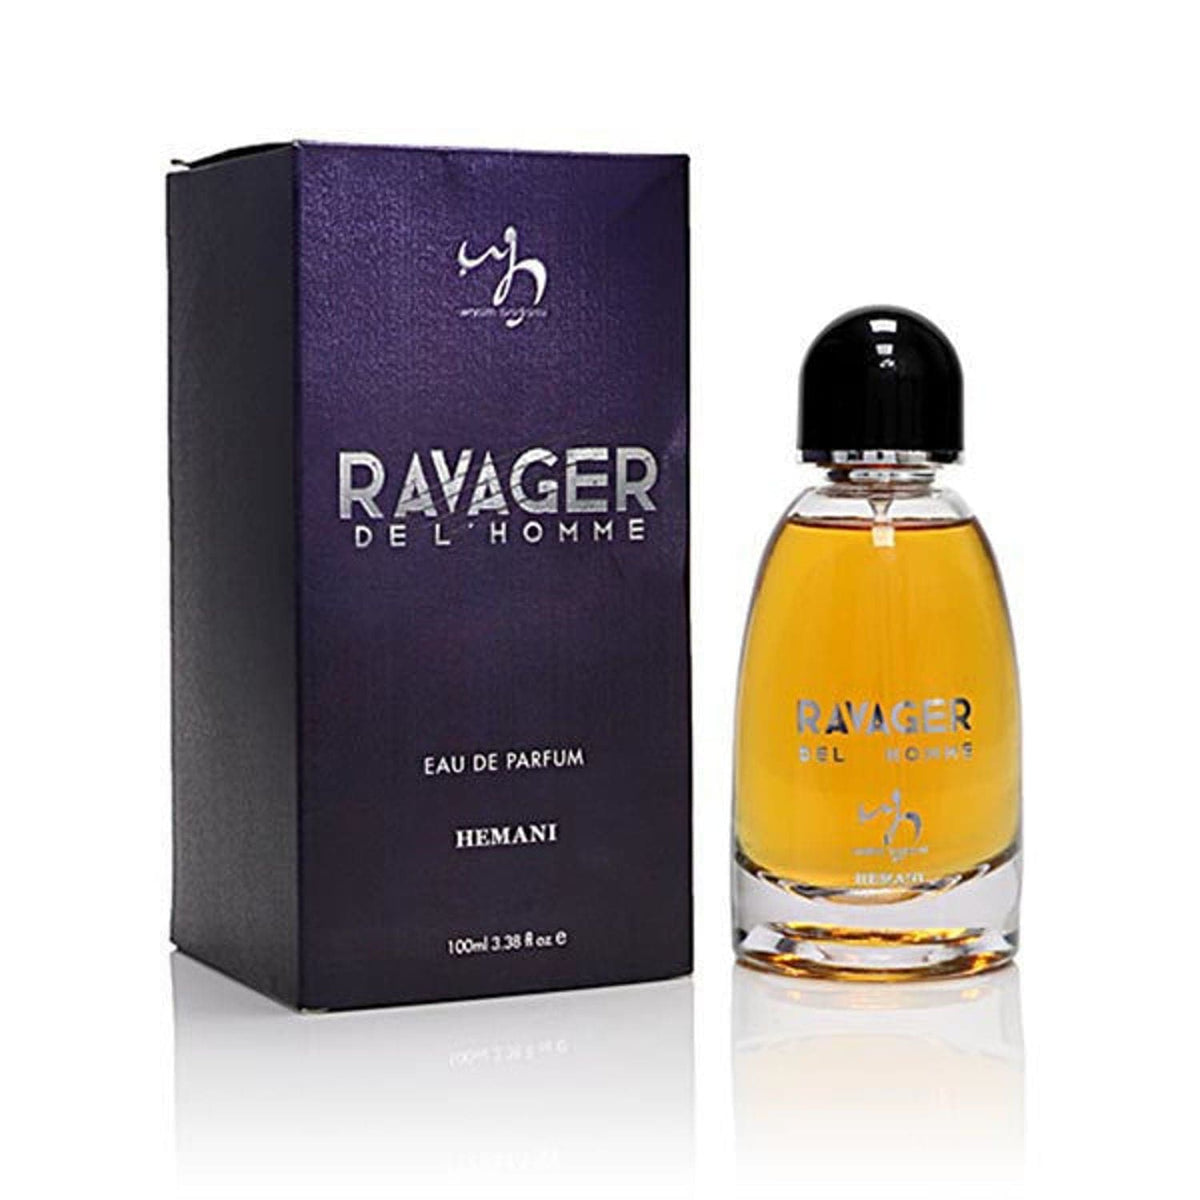 Hemani Ravager Edp Perfume - Premium  from Hemani - Just Rs 3210.00! Shop now at Cozmetica